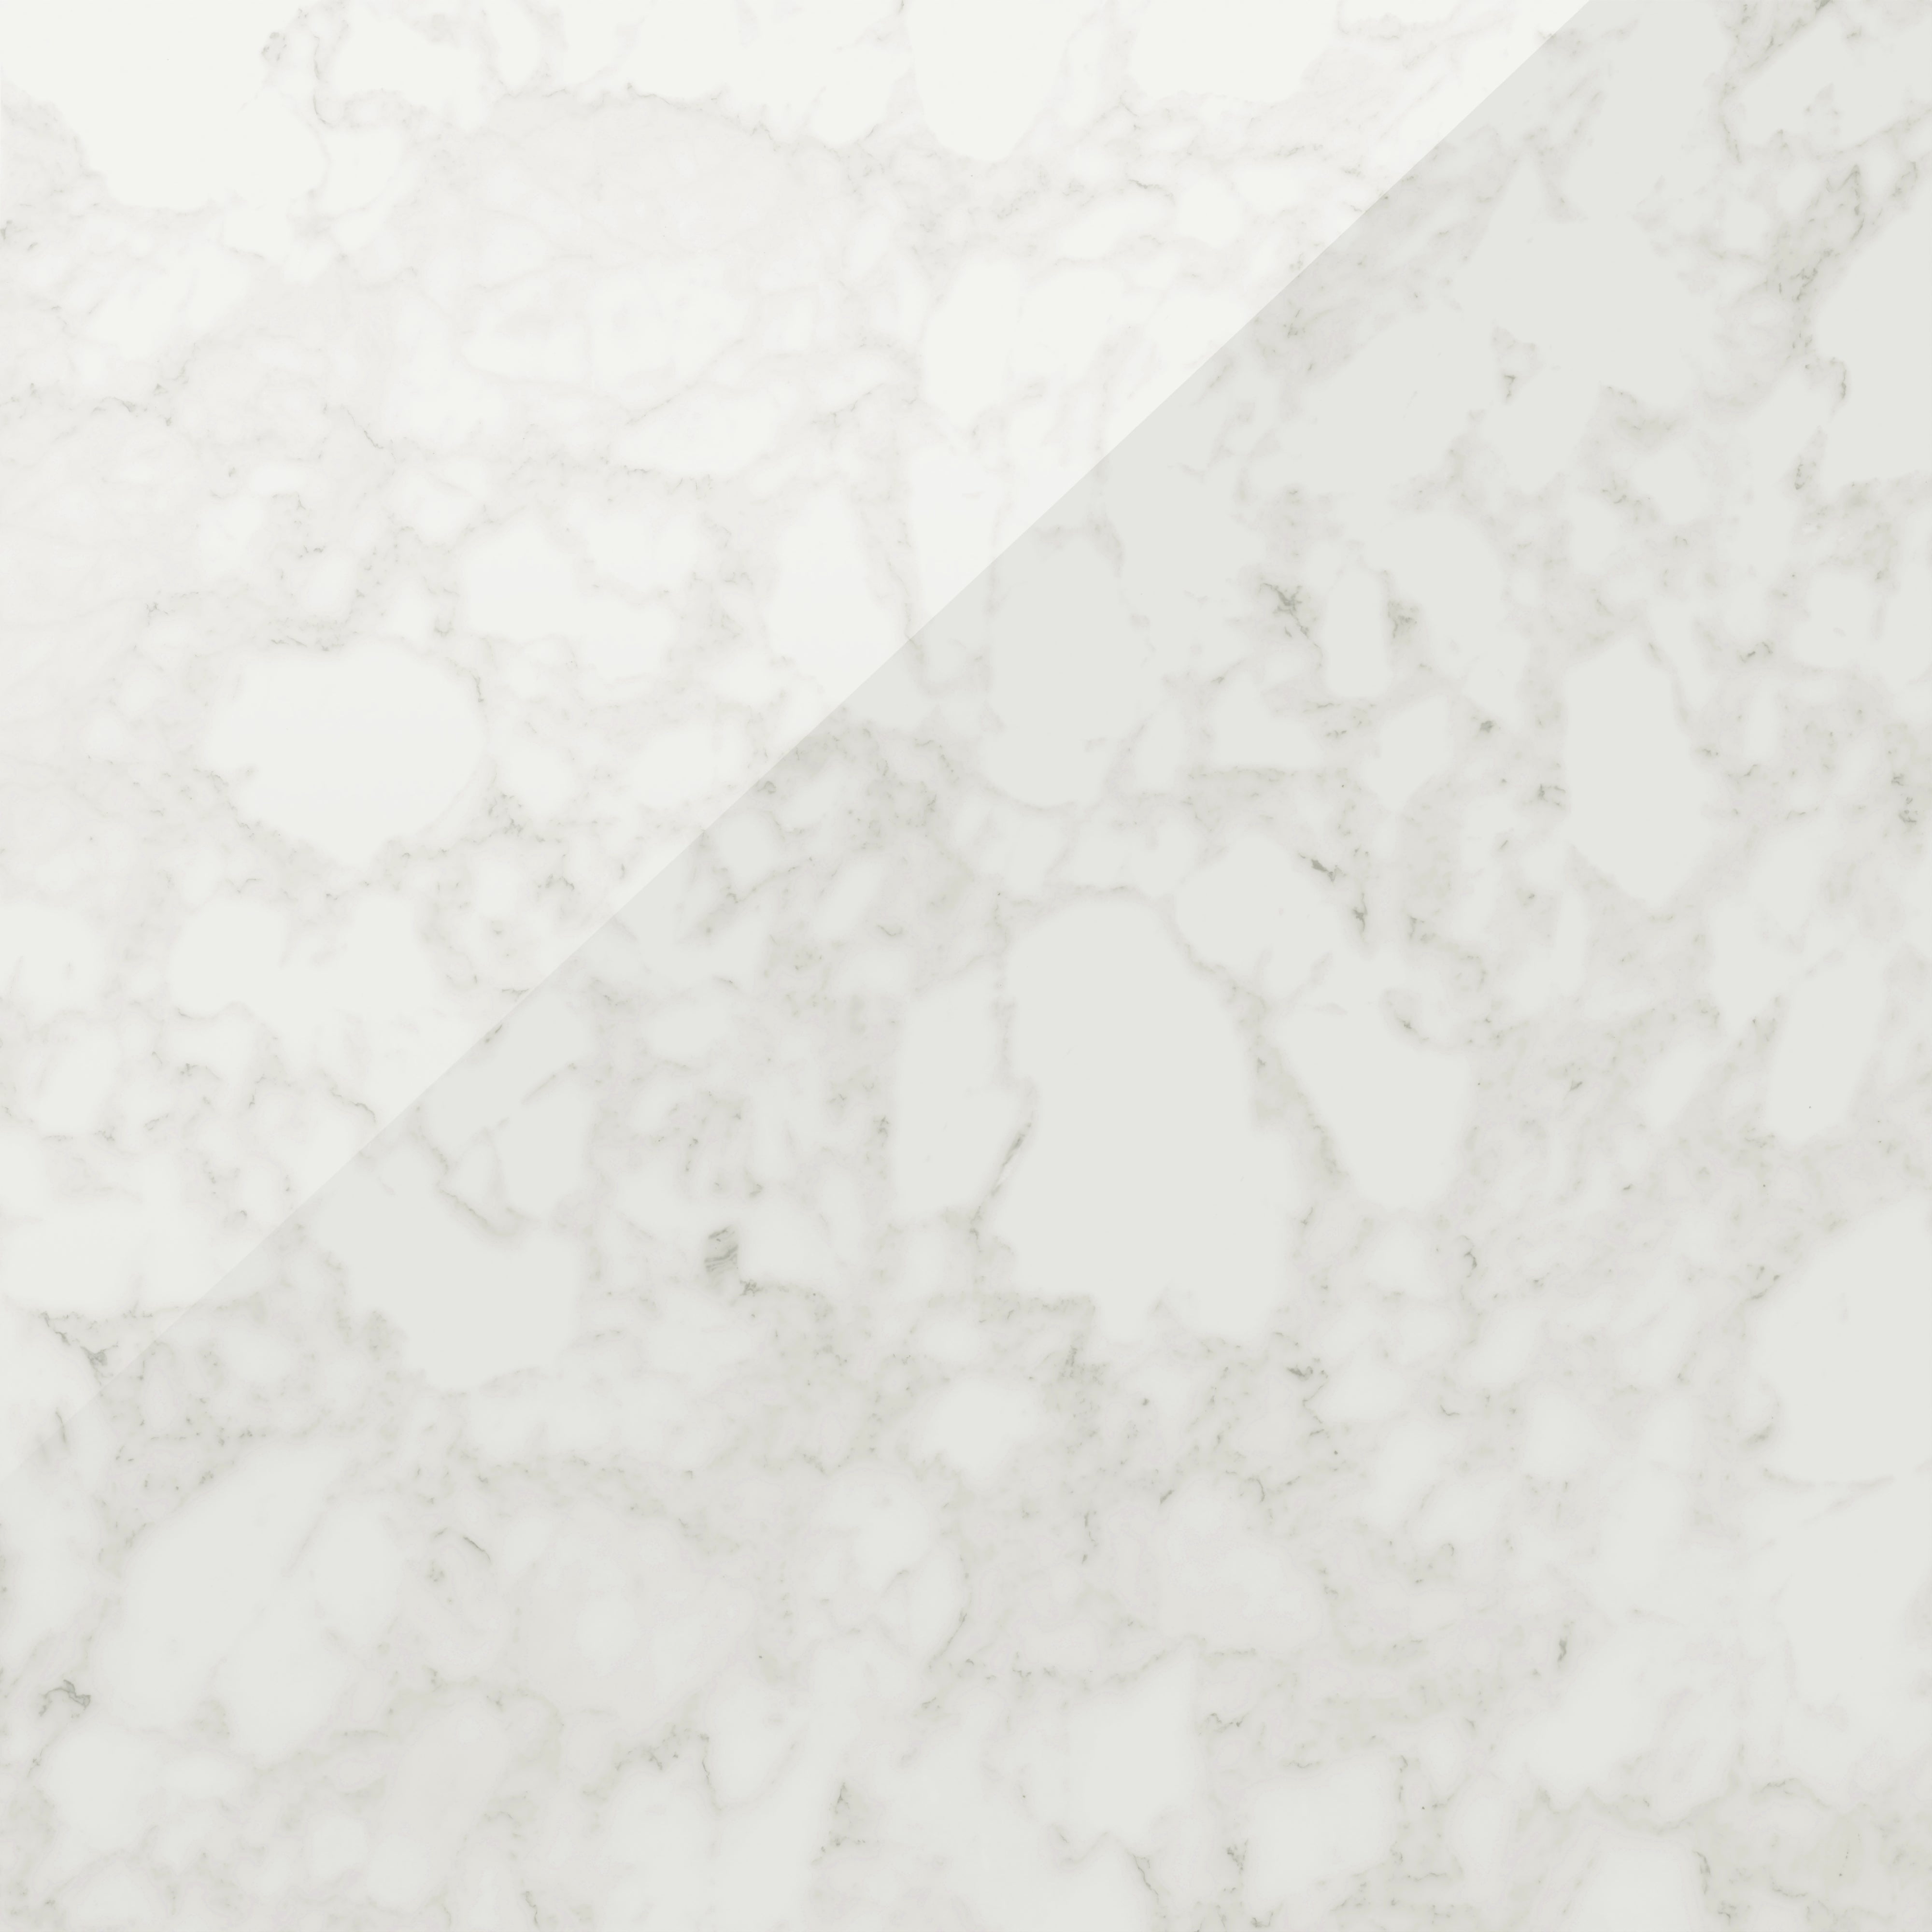 Aniston 48x48 Polished Porcelain Tile in Carrara Bianco